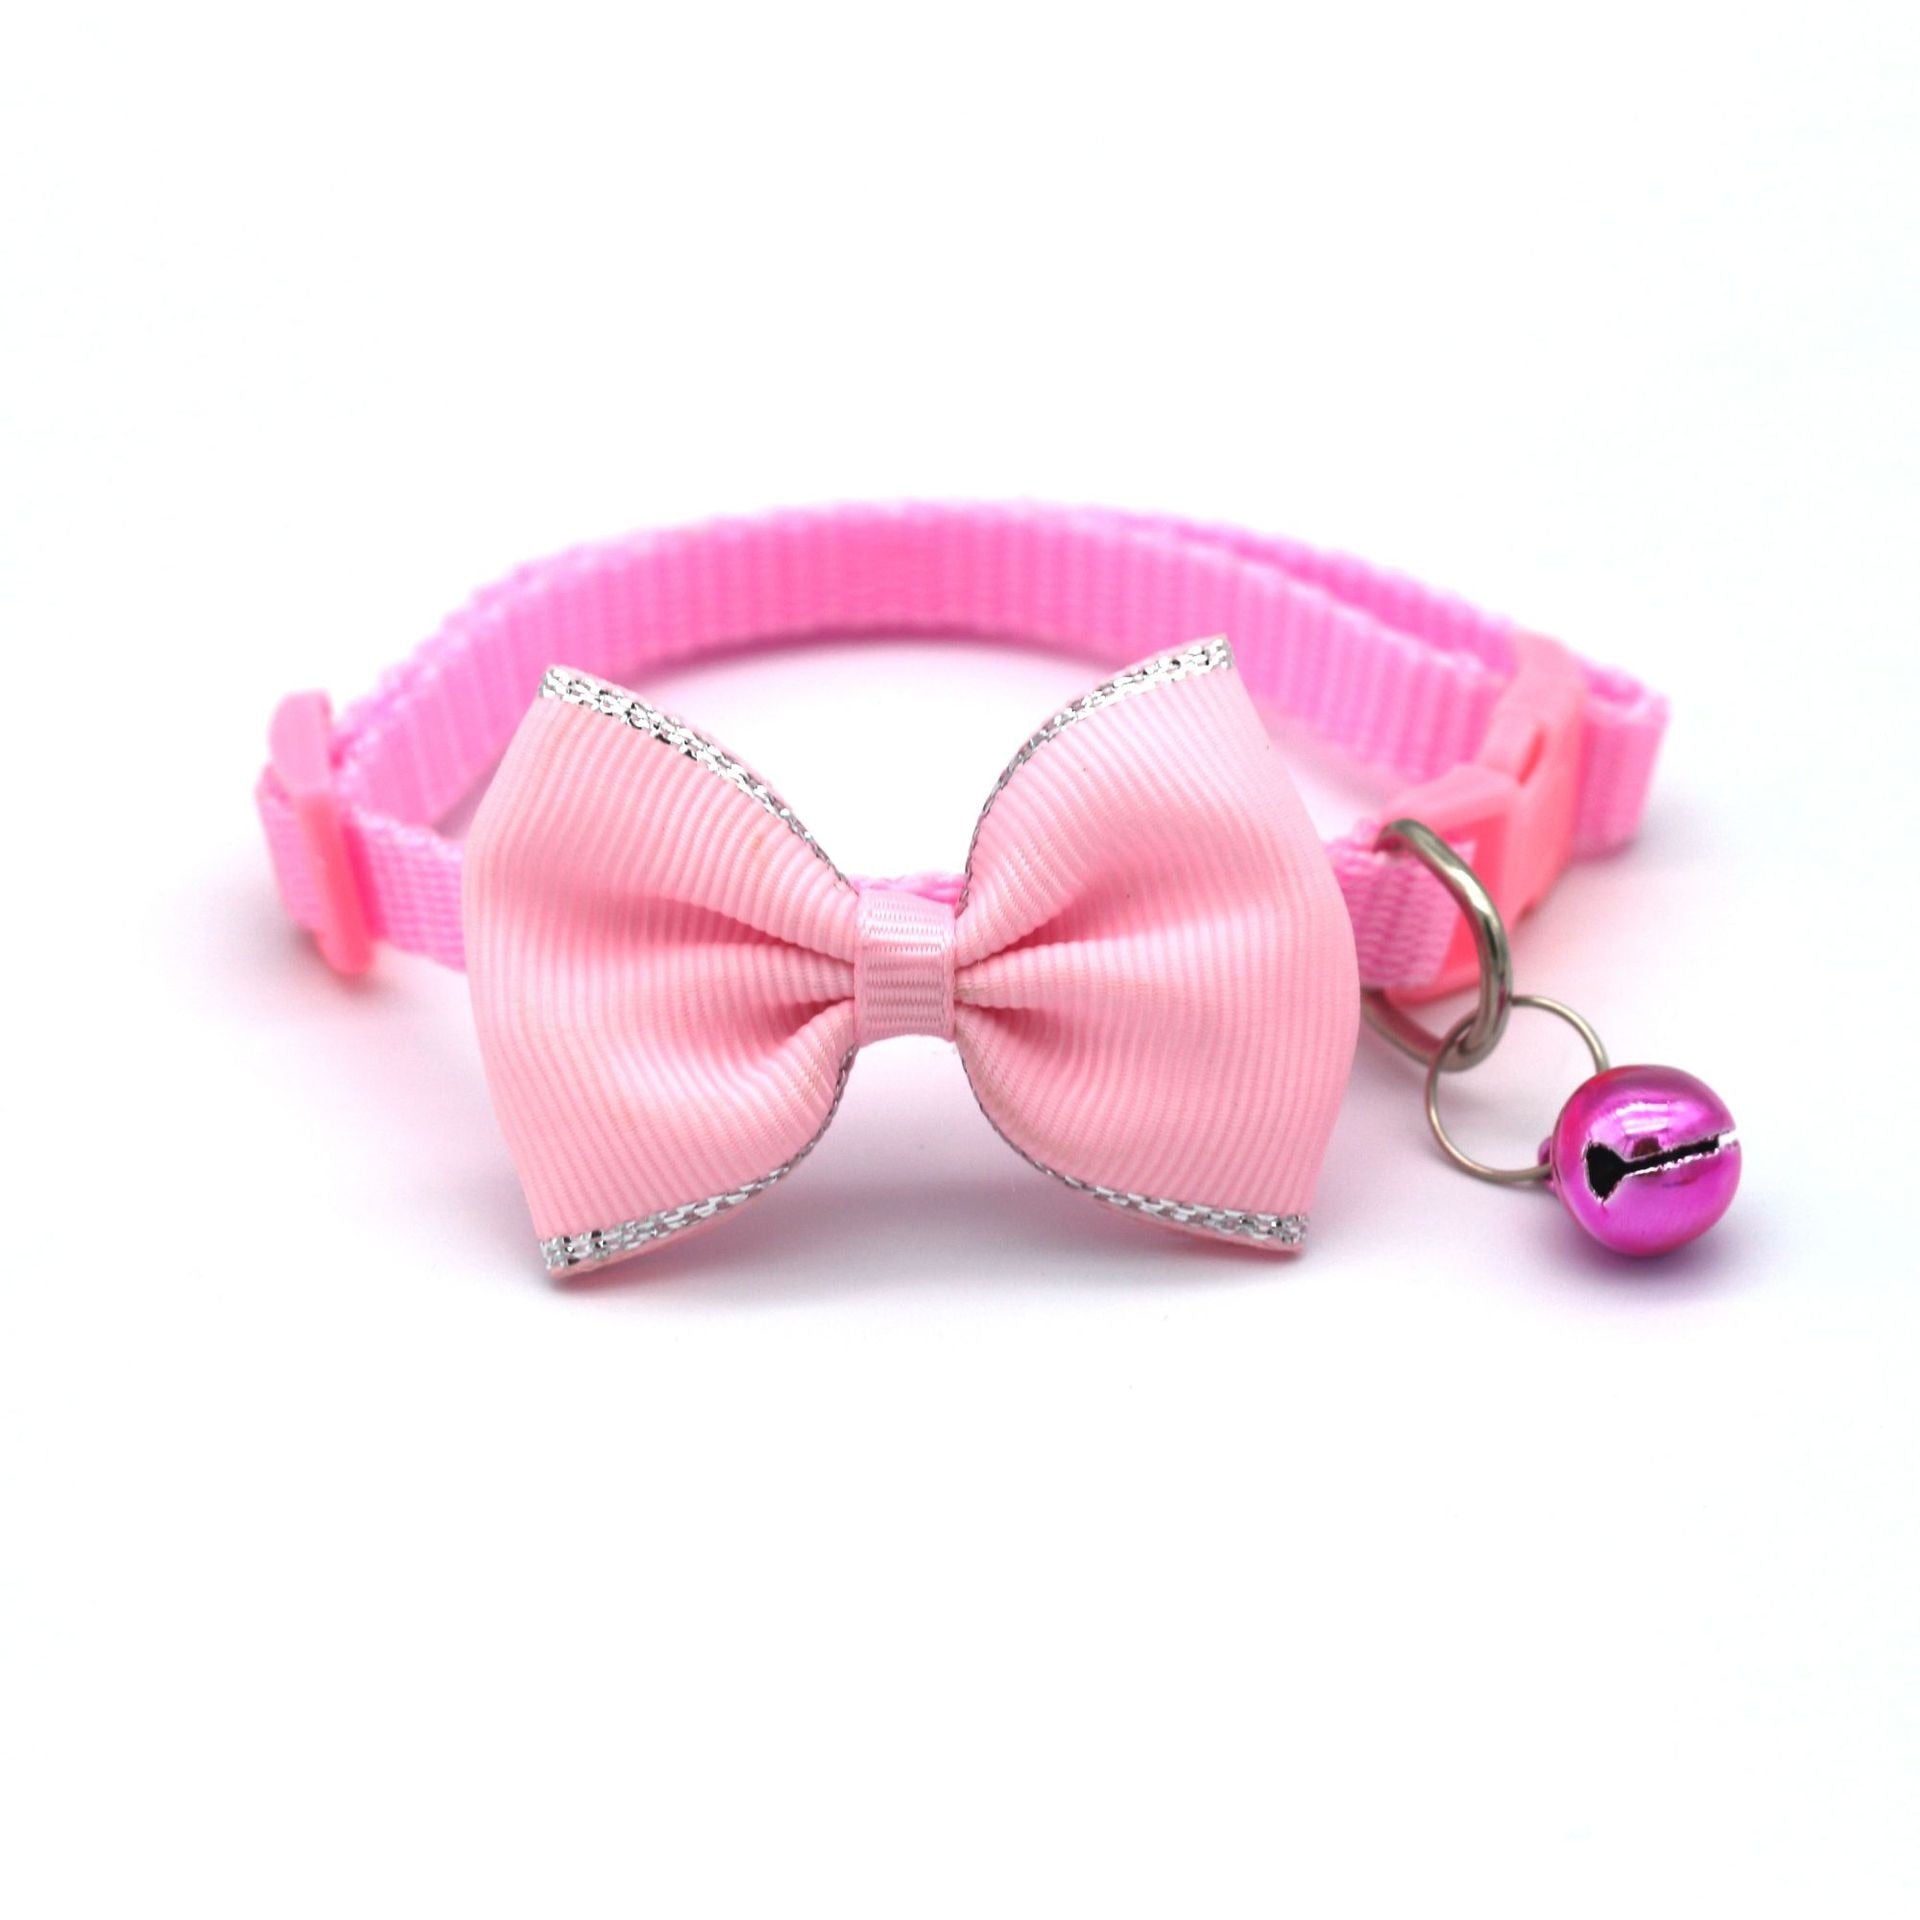 Cat Collars with Bells - Light Pink - Cat collars